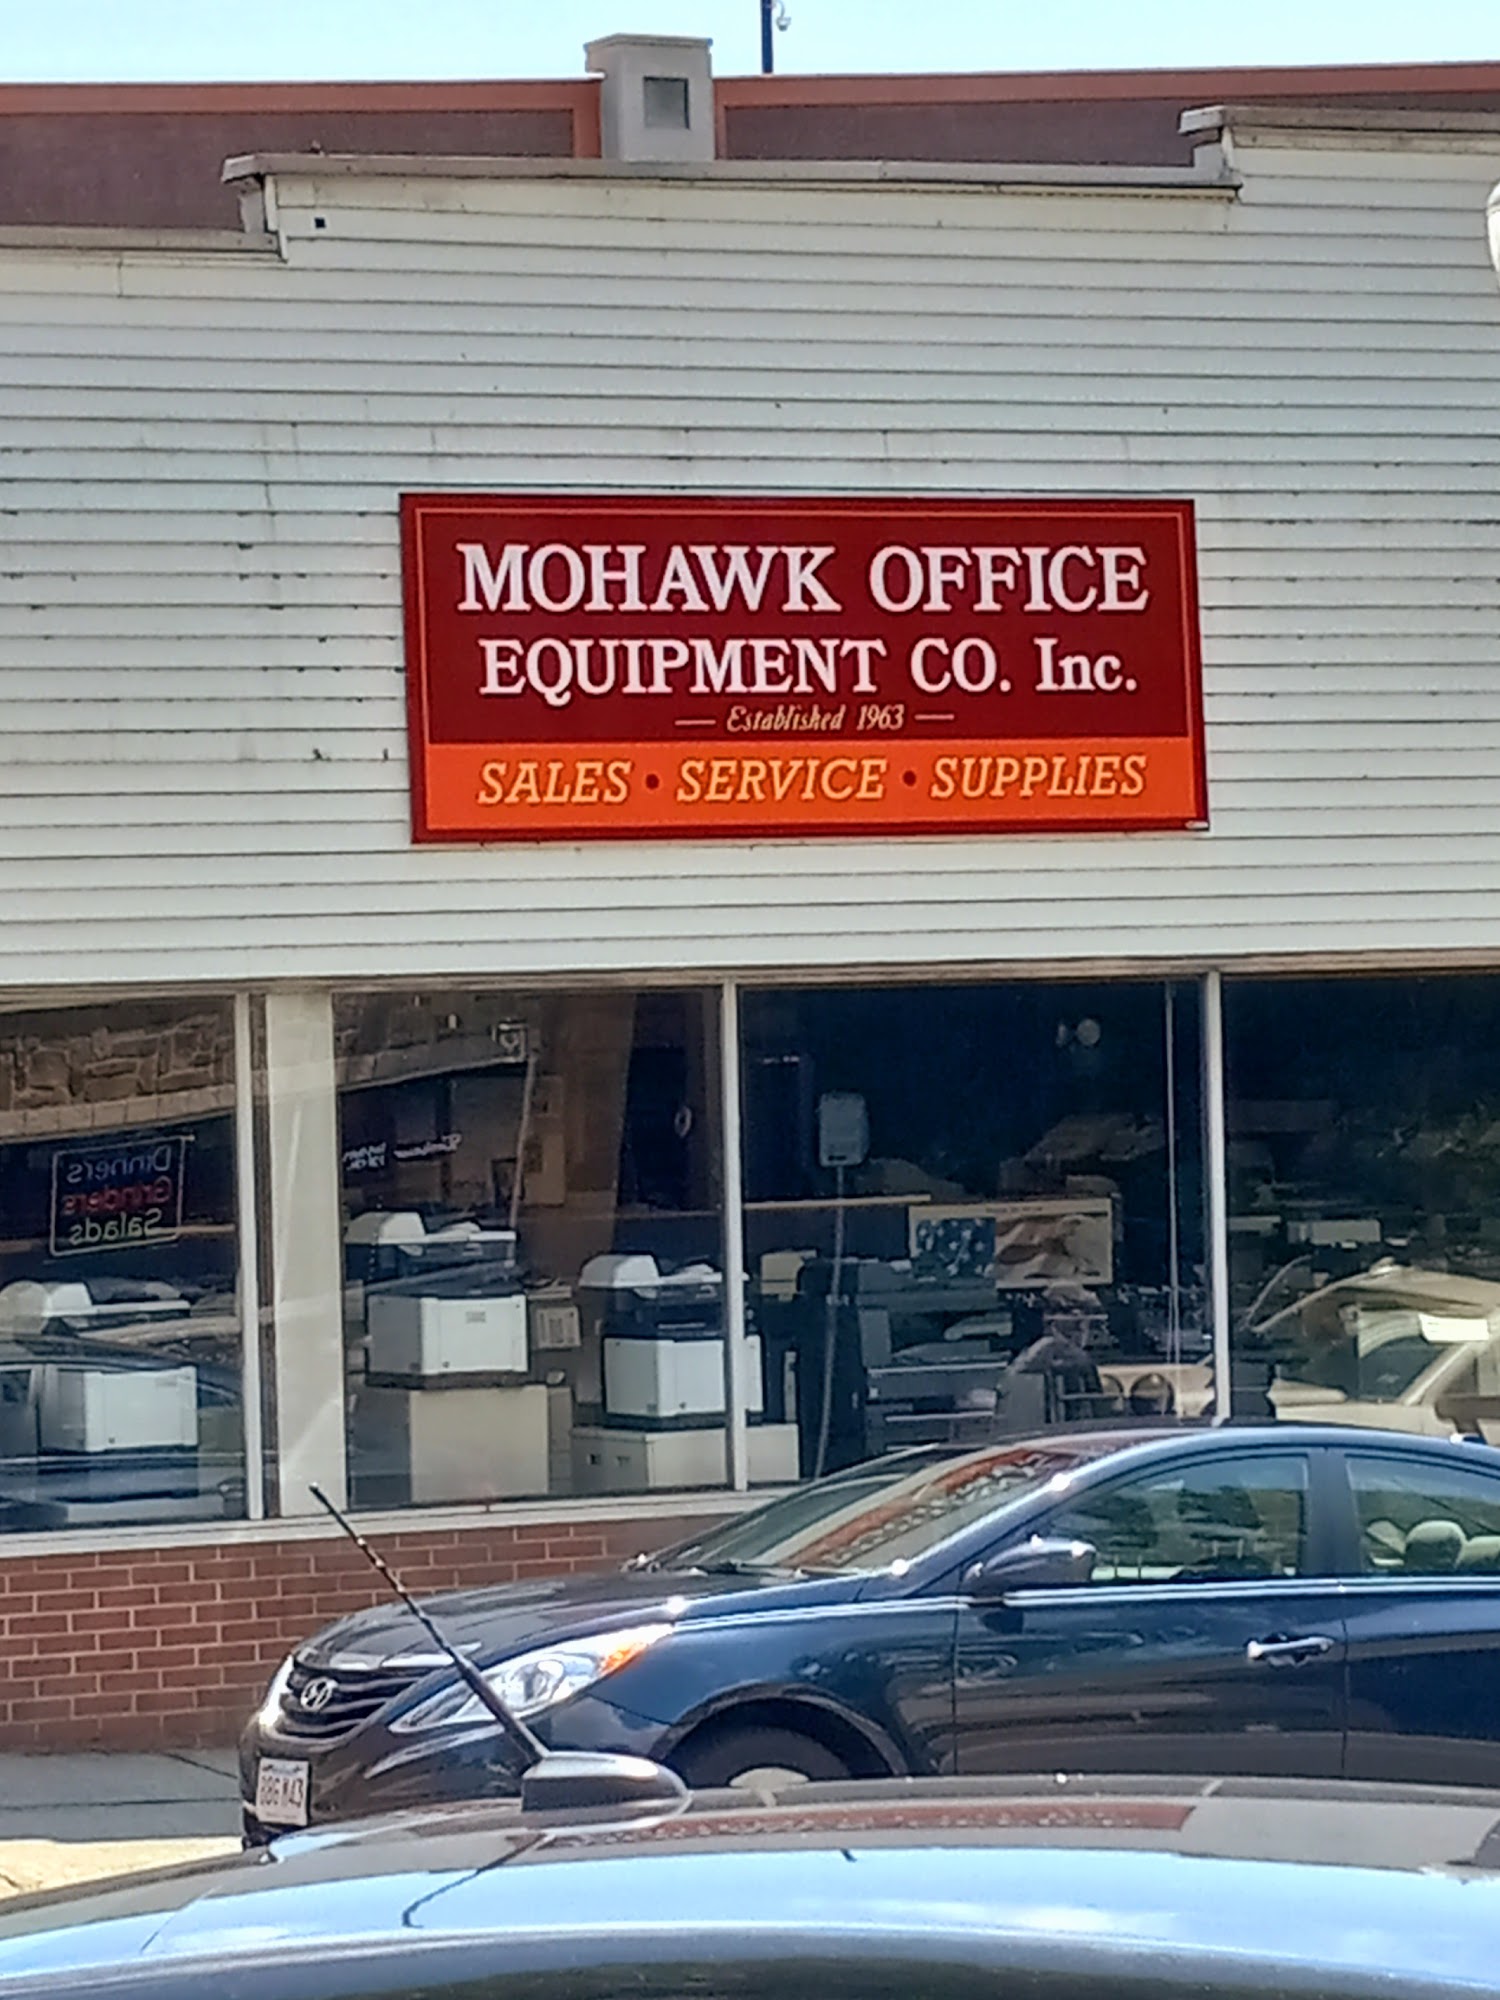 Mohawk Office Equipment Co